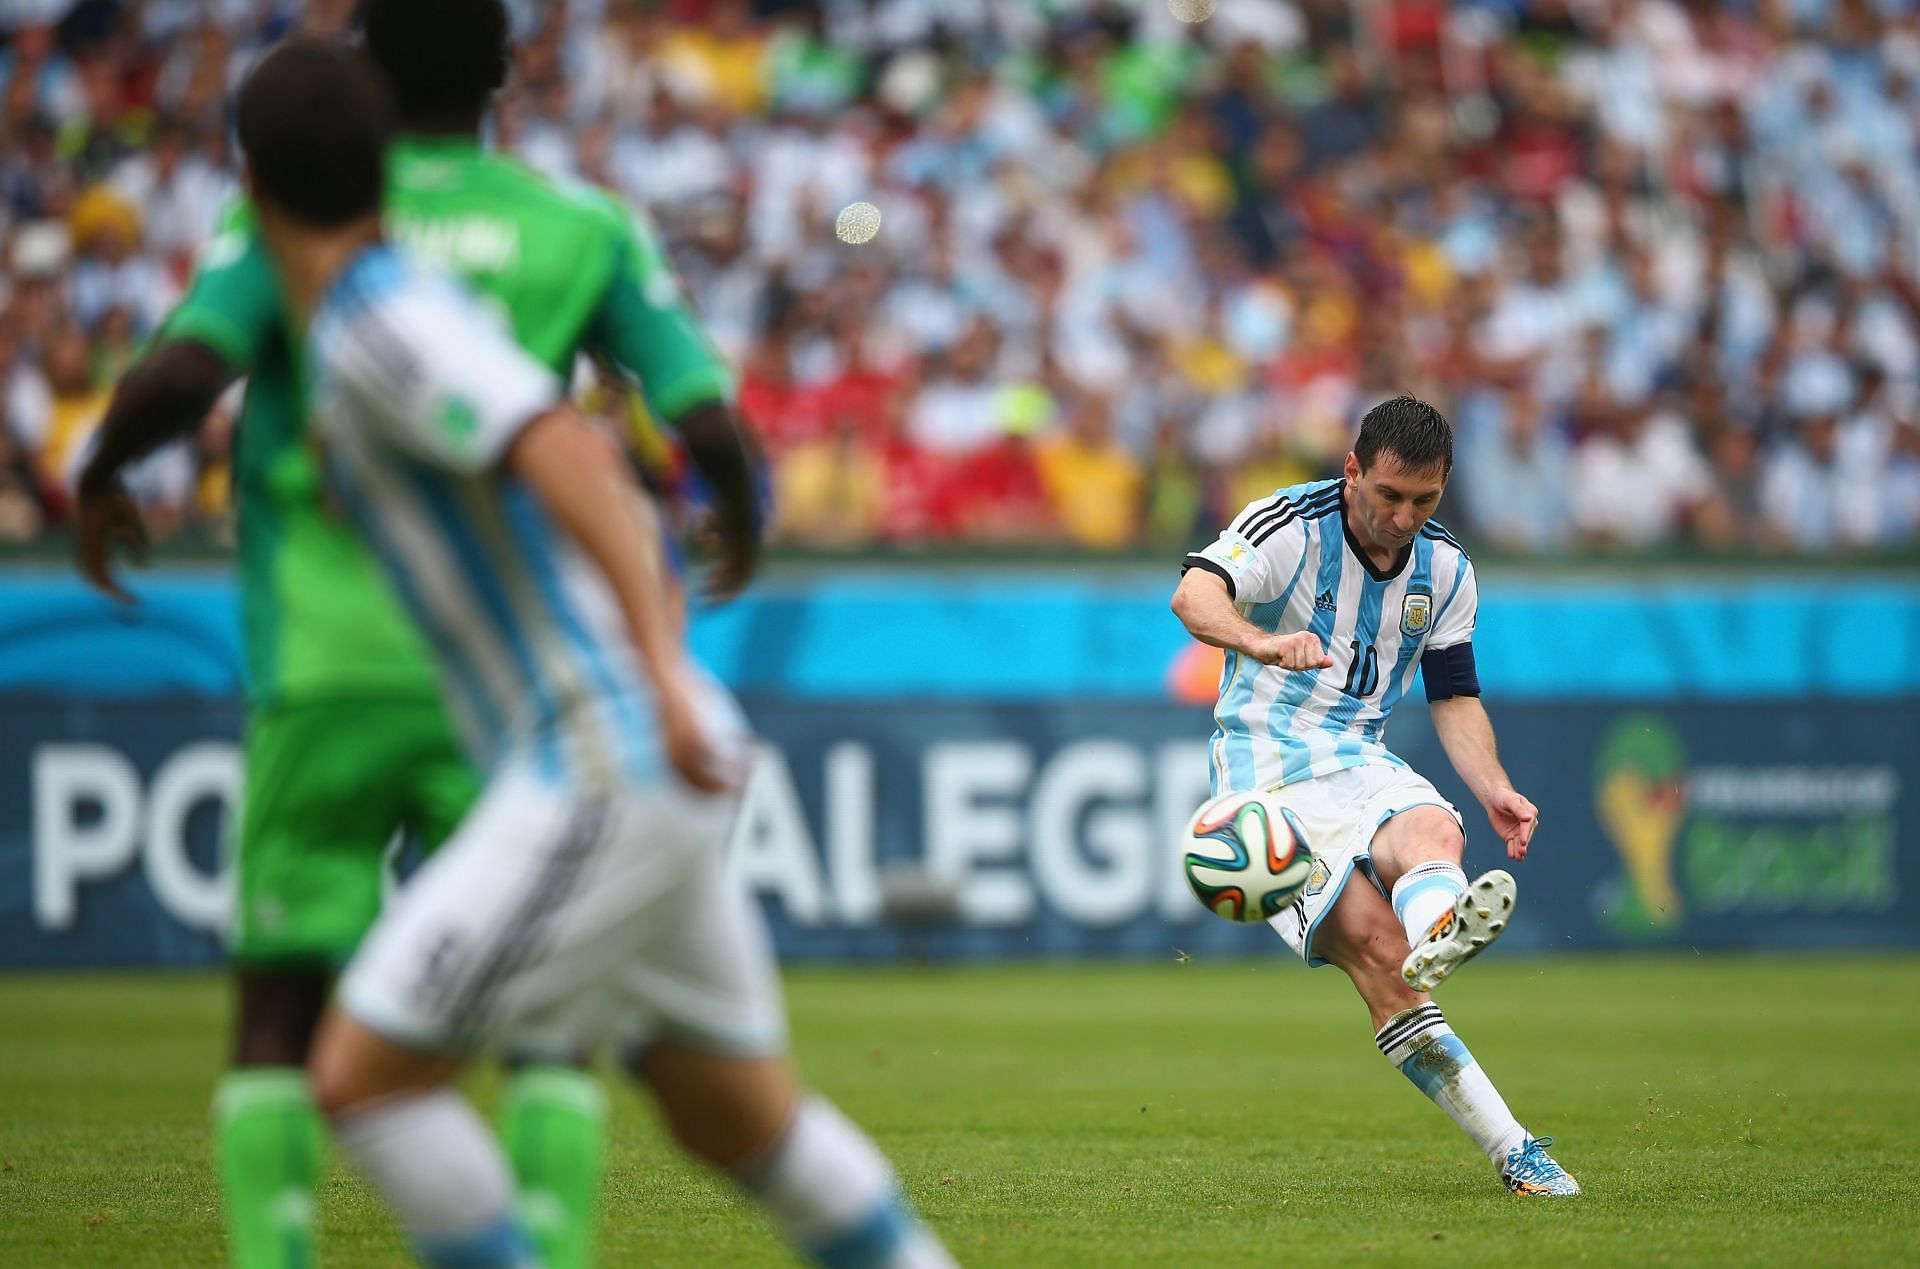 Messi scored a brace to grant Argentina a win